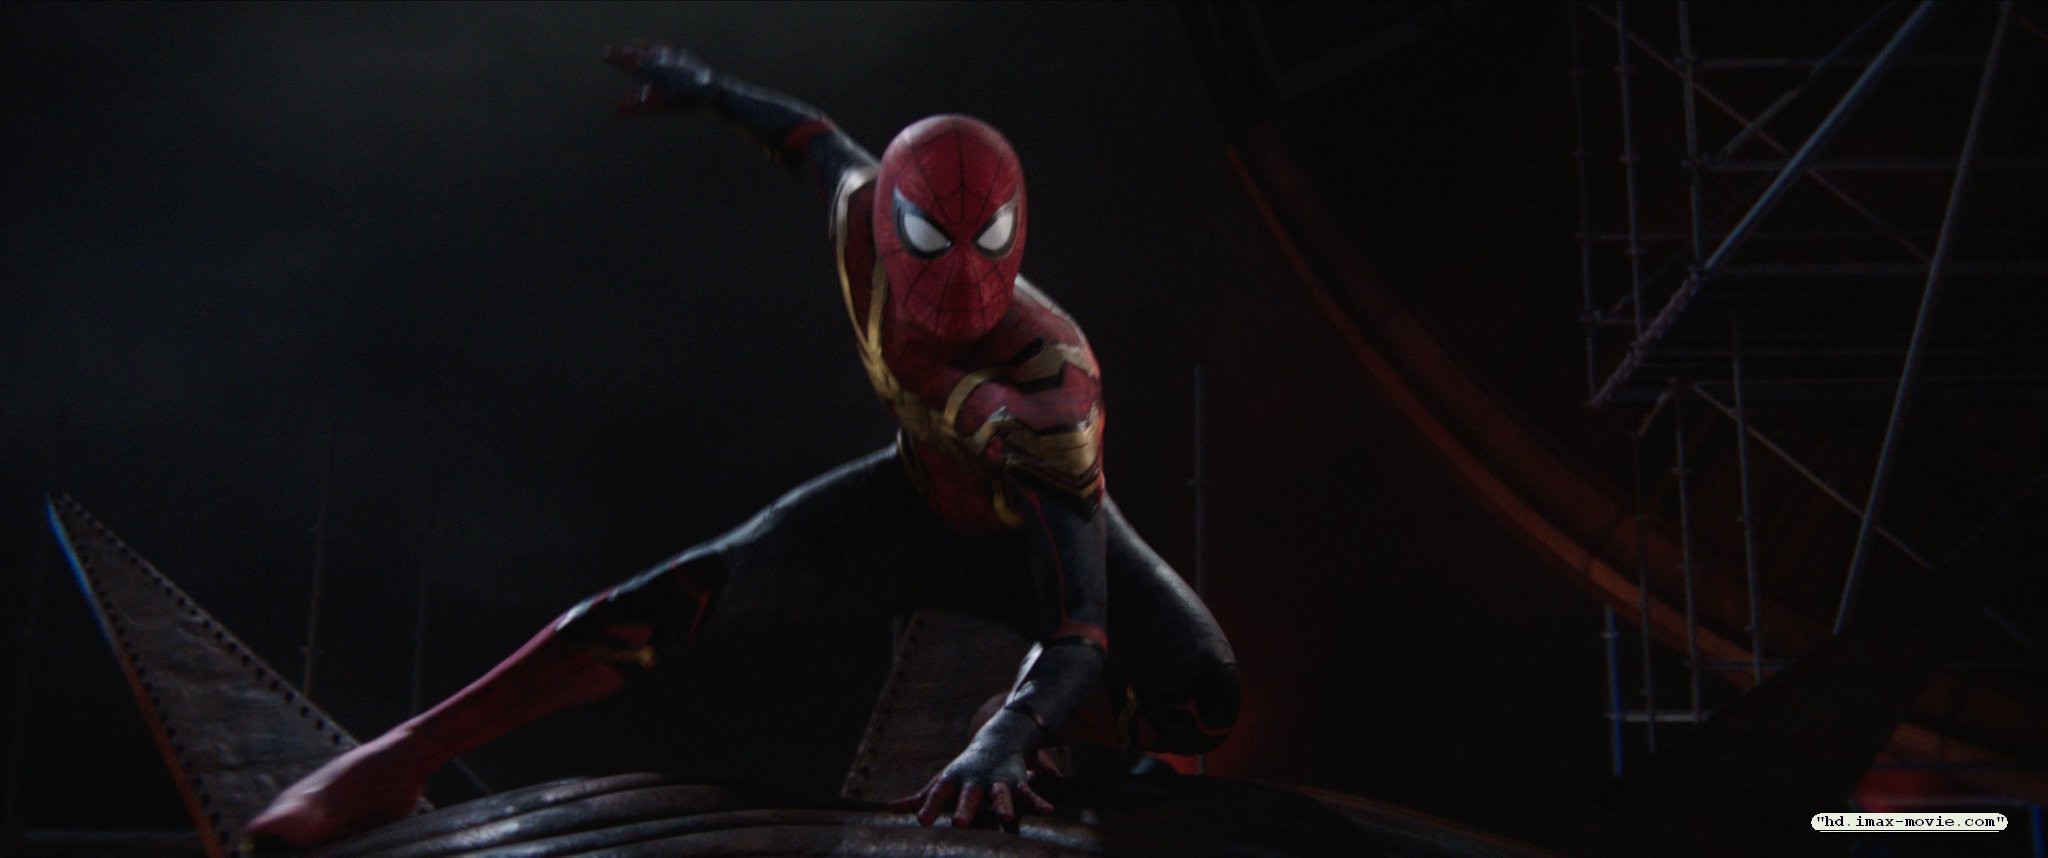 Ver - Película Spider-Man: Sin Camino a Casa 2021 (@ver_spider) / Twitter